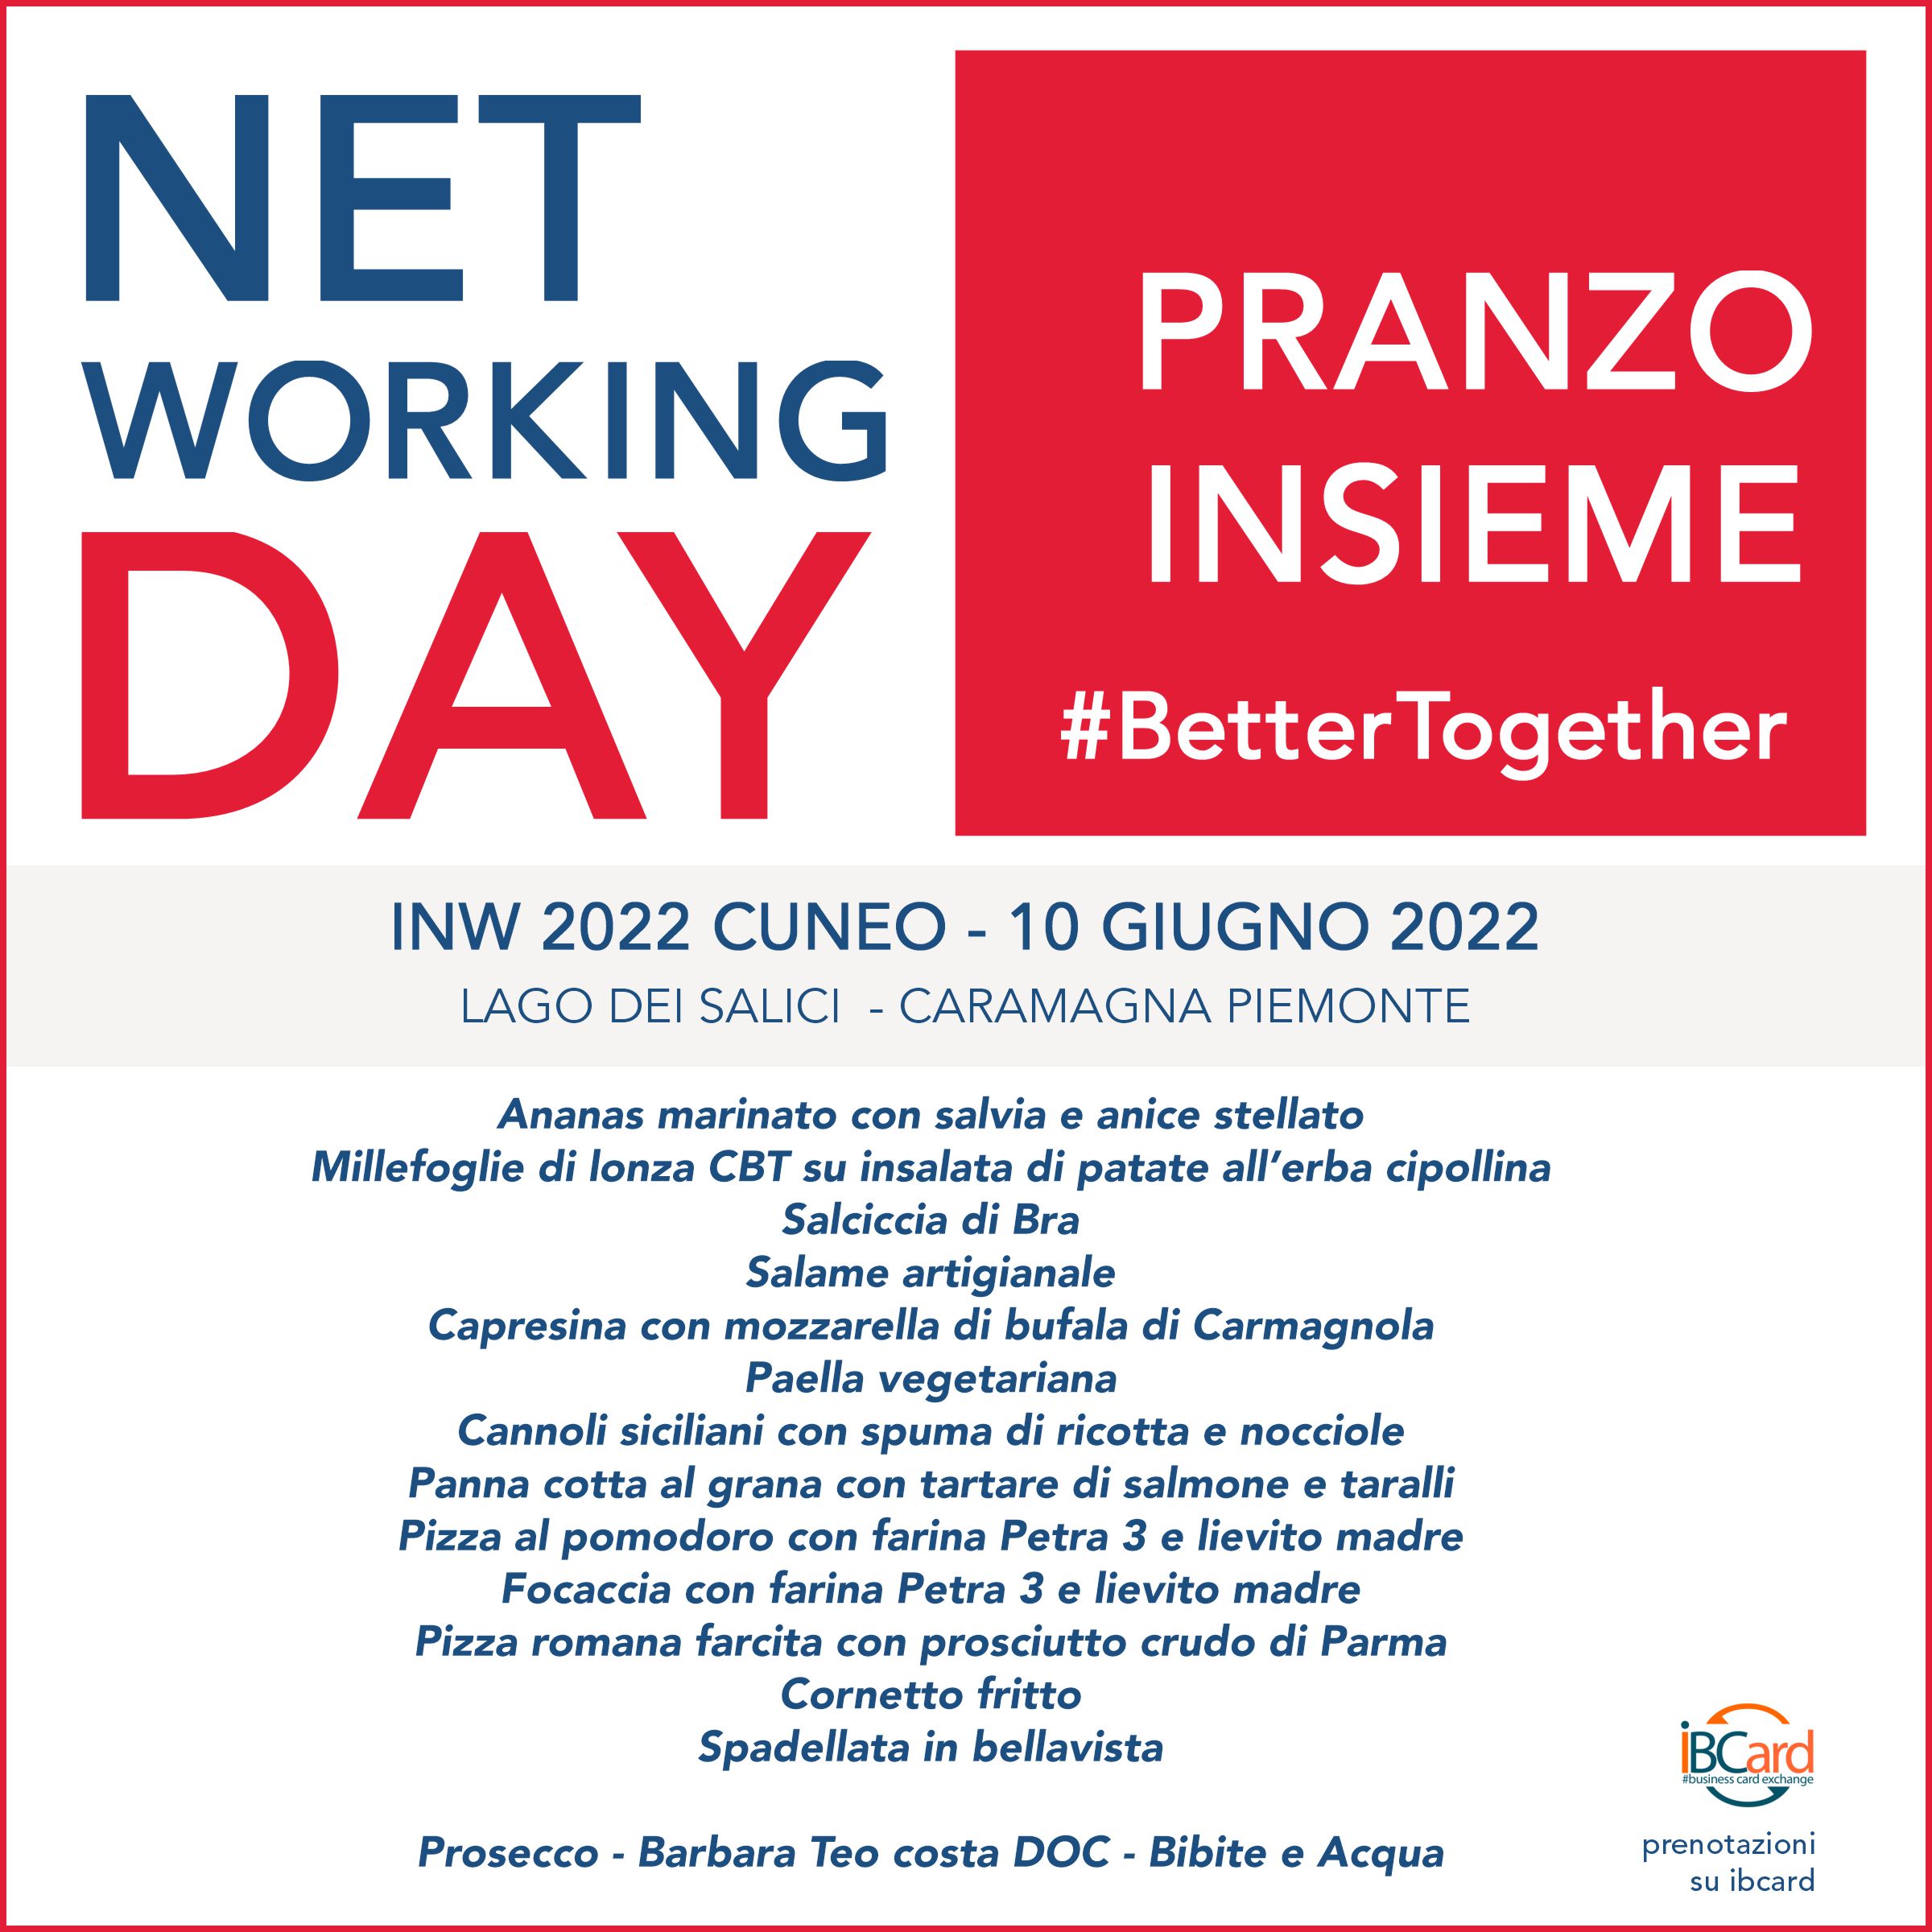 PRANZO INSIEME - INW2022 Cuneo